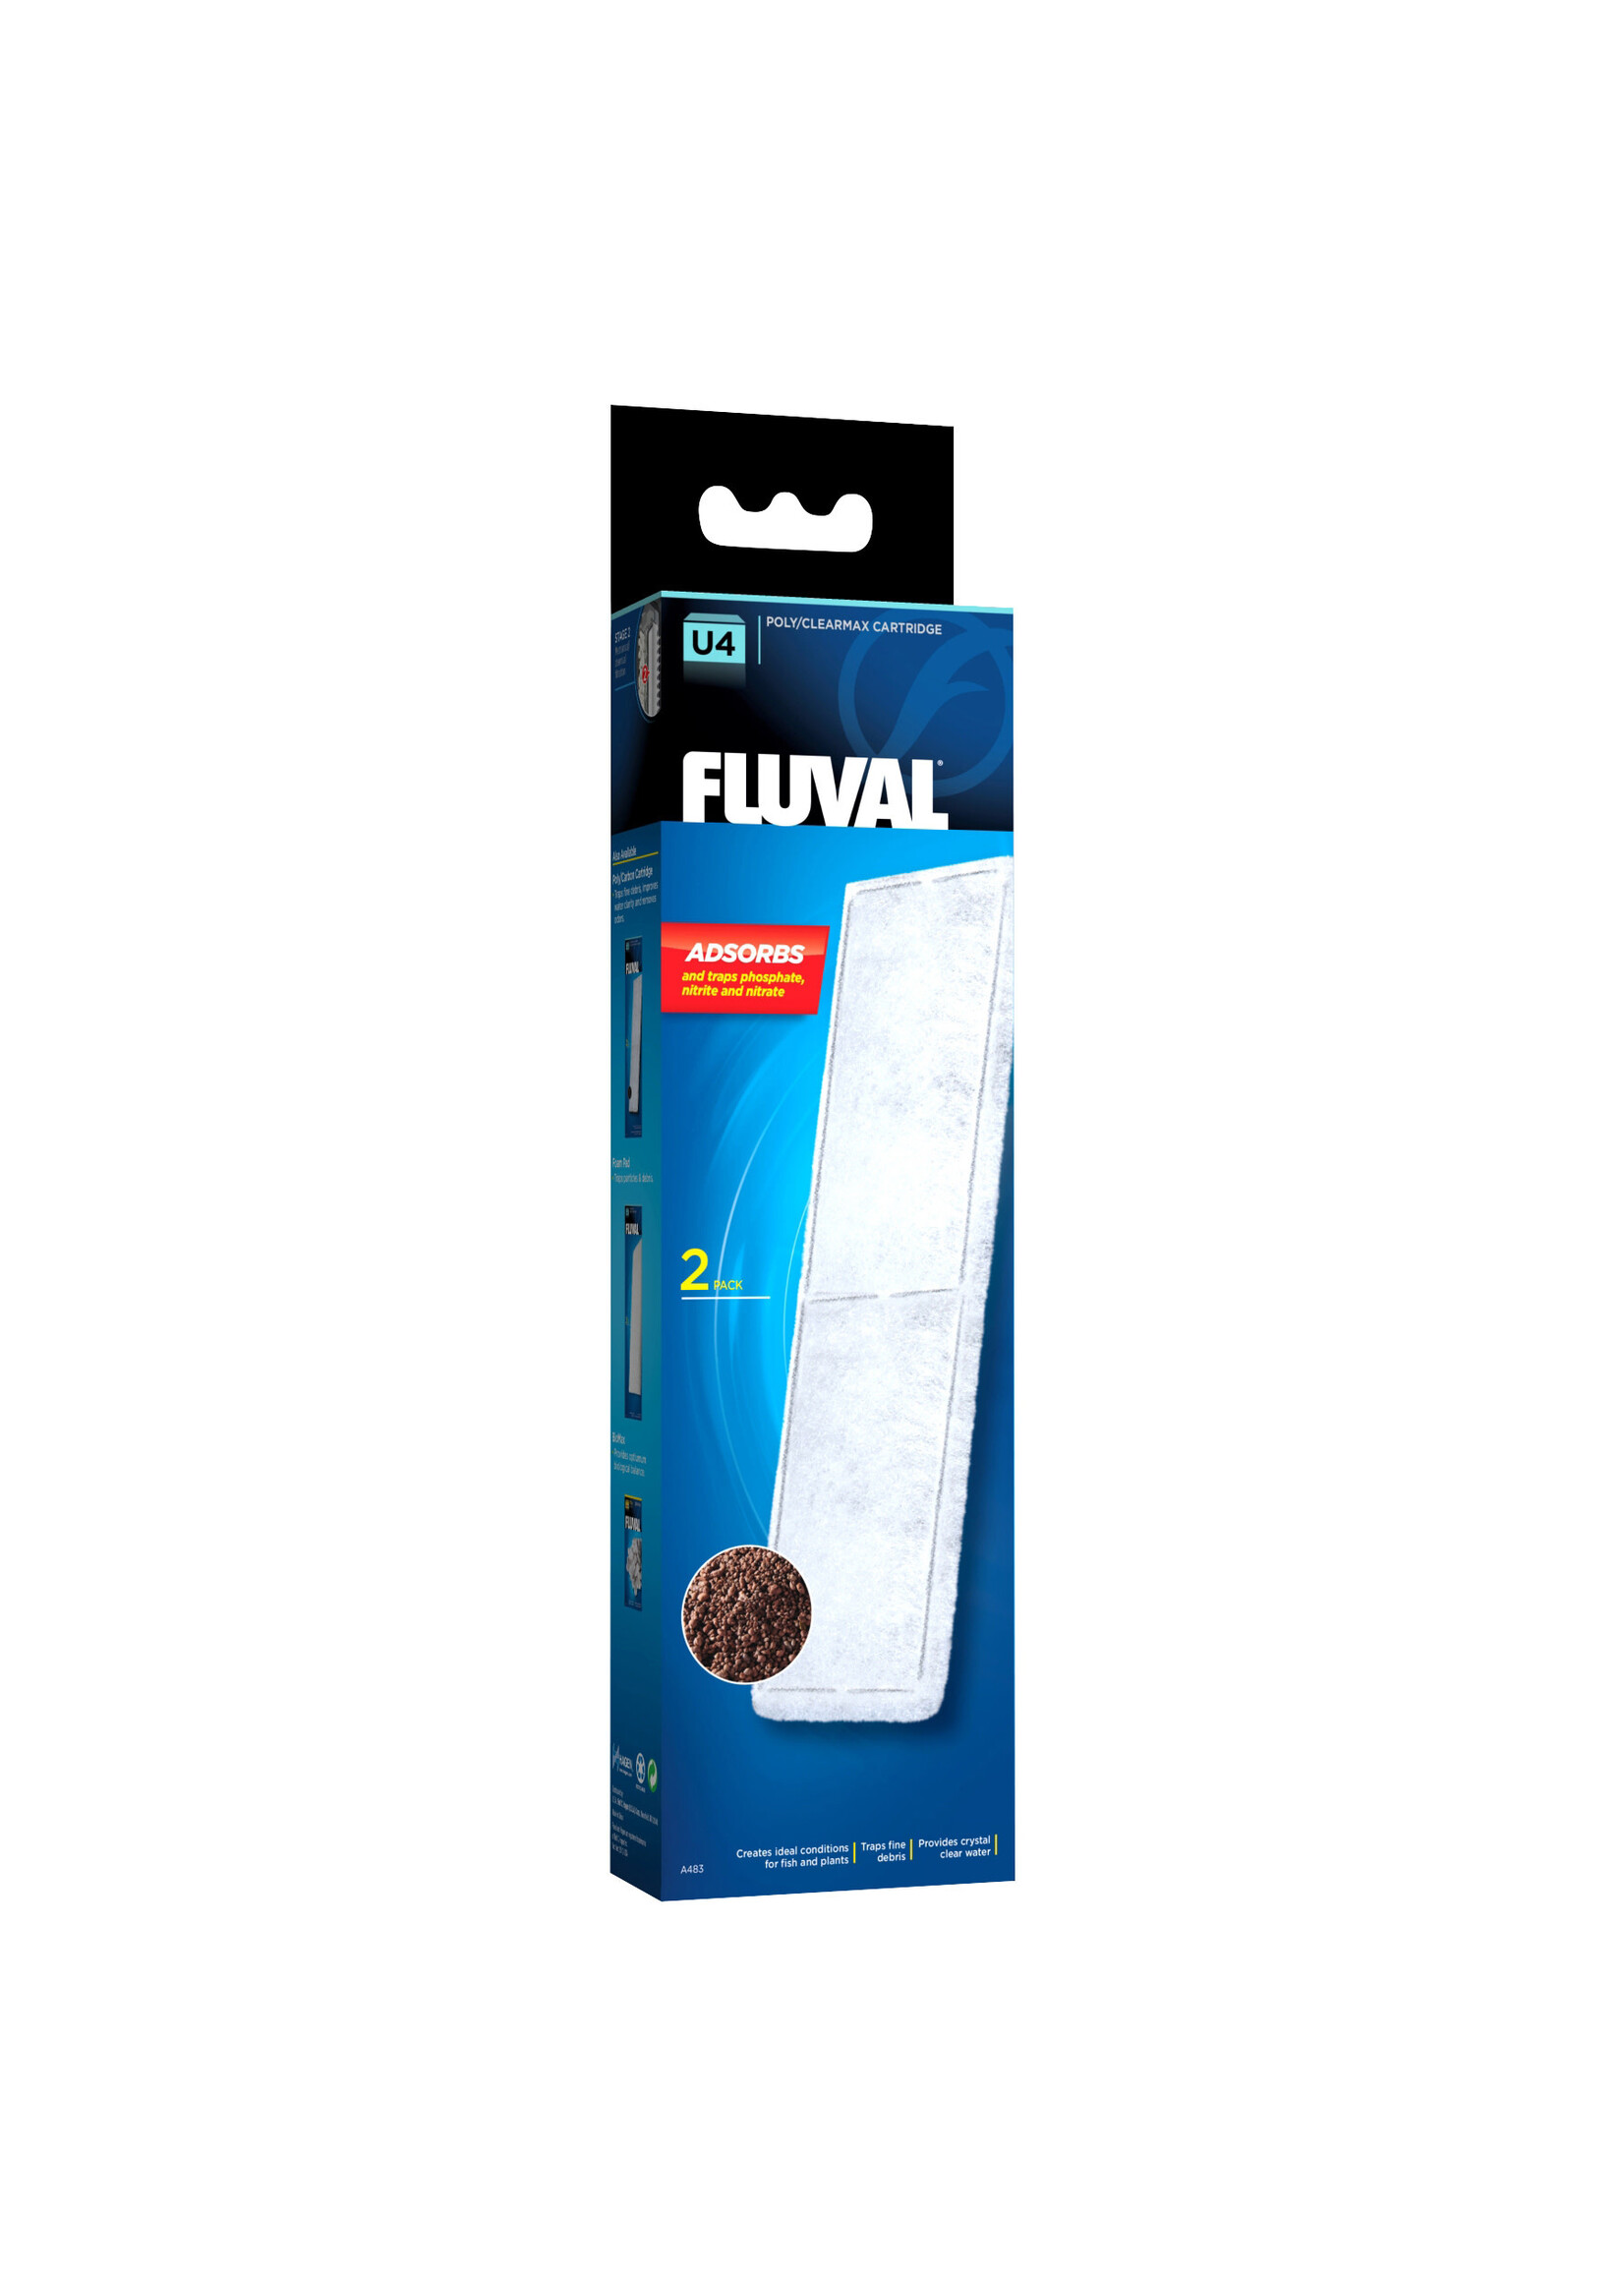 Fluval U4 CLEARMAX CARTRIDGE 2 PK